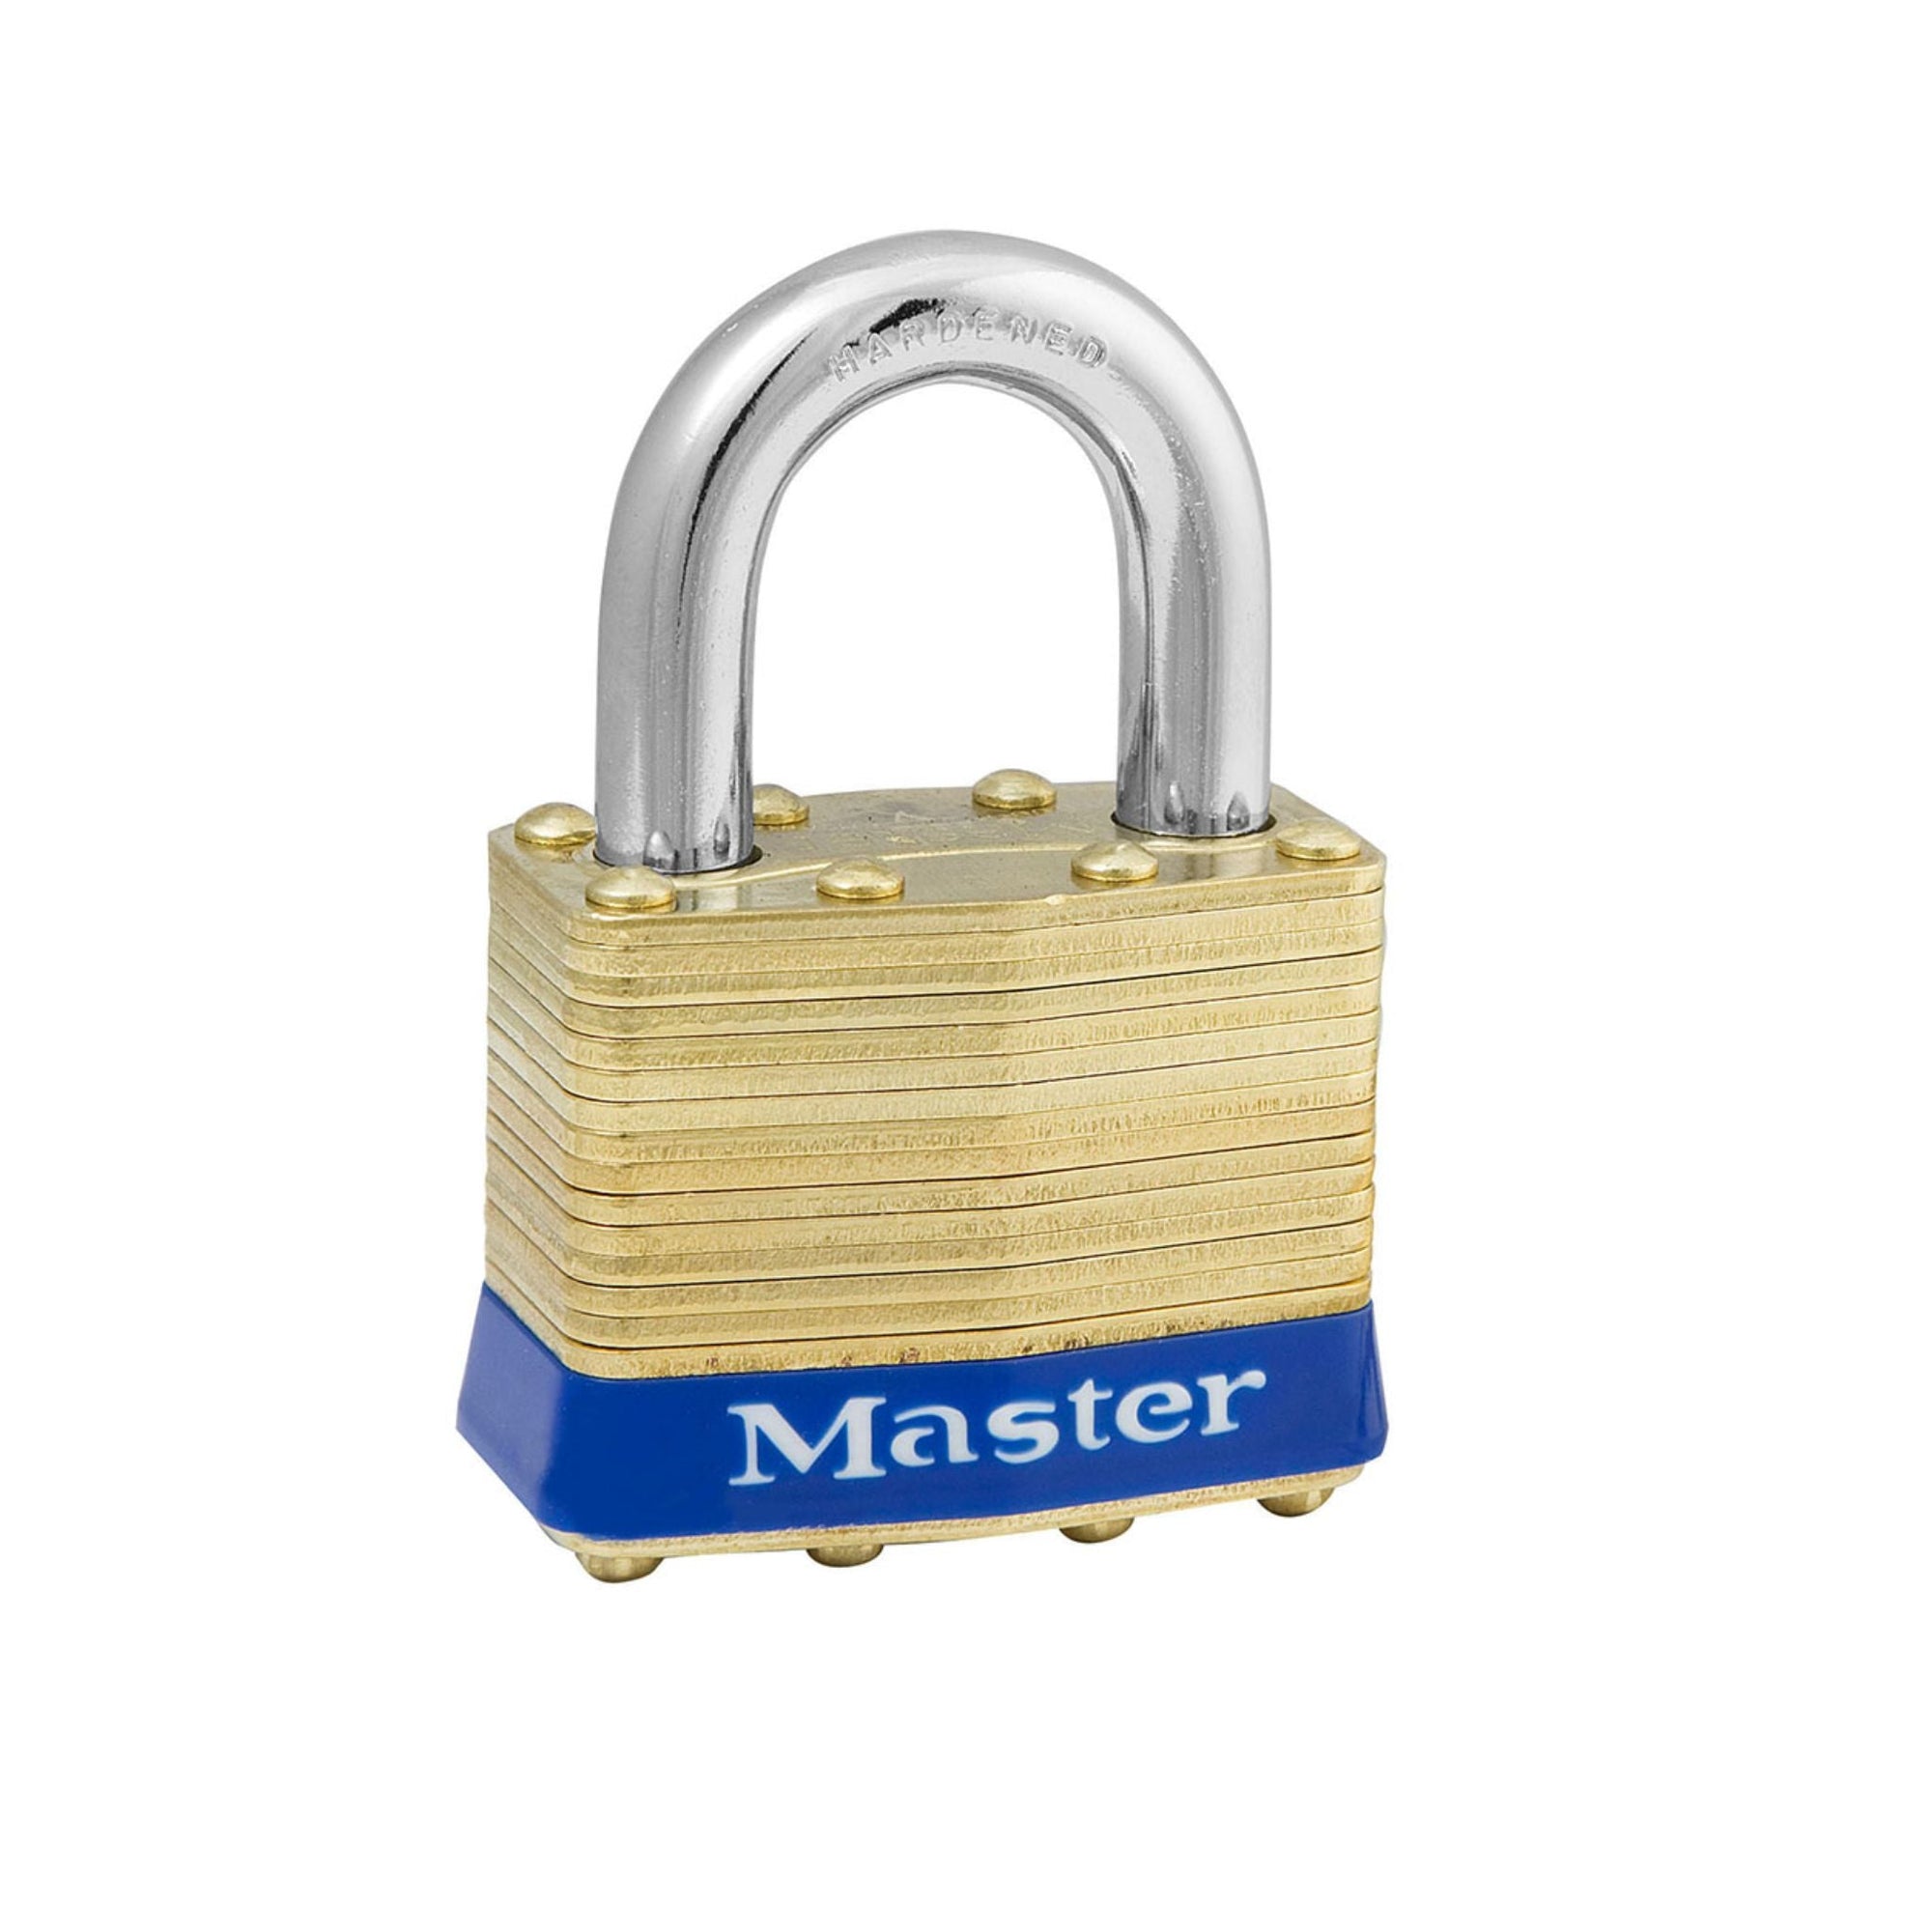 Master Lock 2KA 0304 Lock Laminated brass No. 2 Series Padlock Keyed to Match Existing Key Number KA0304 - The Lock Source